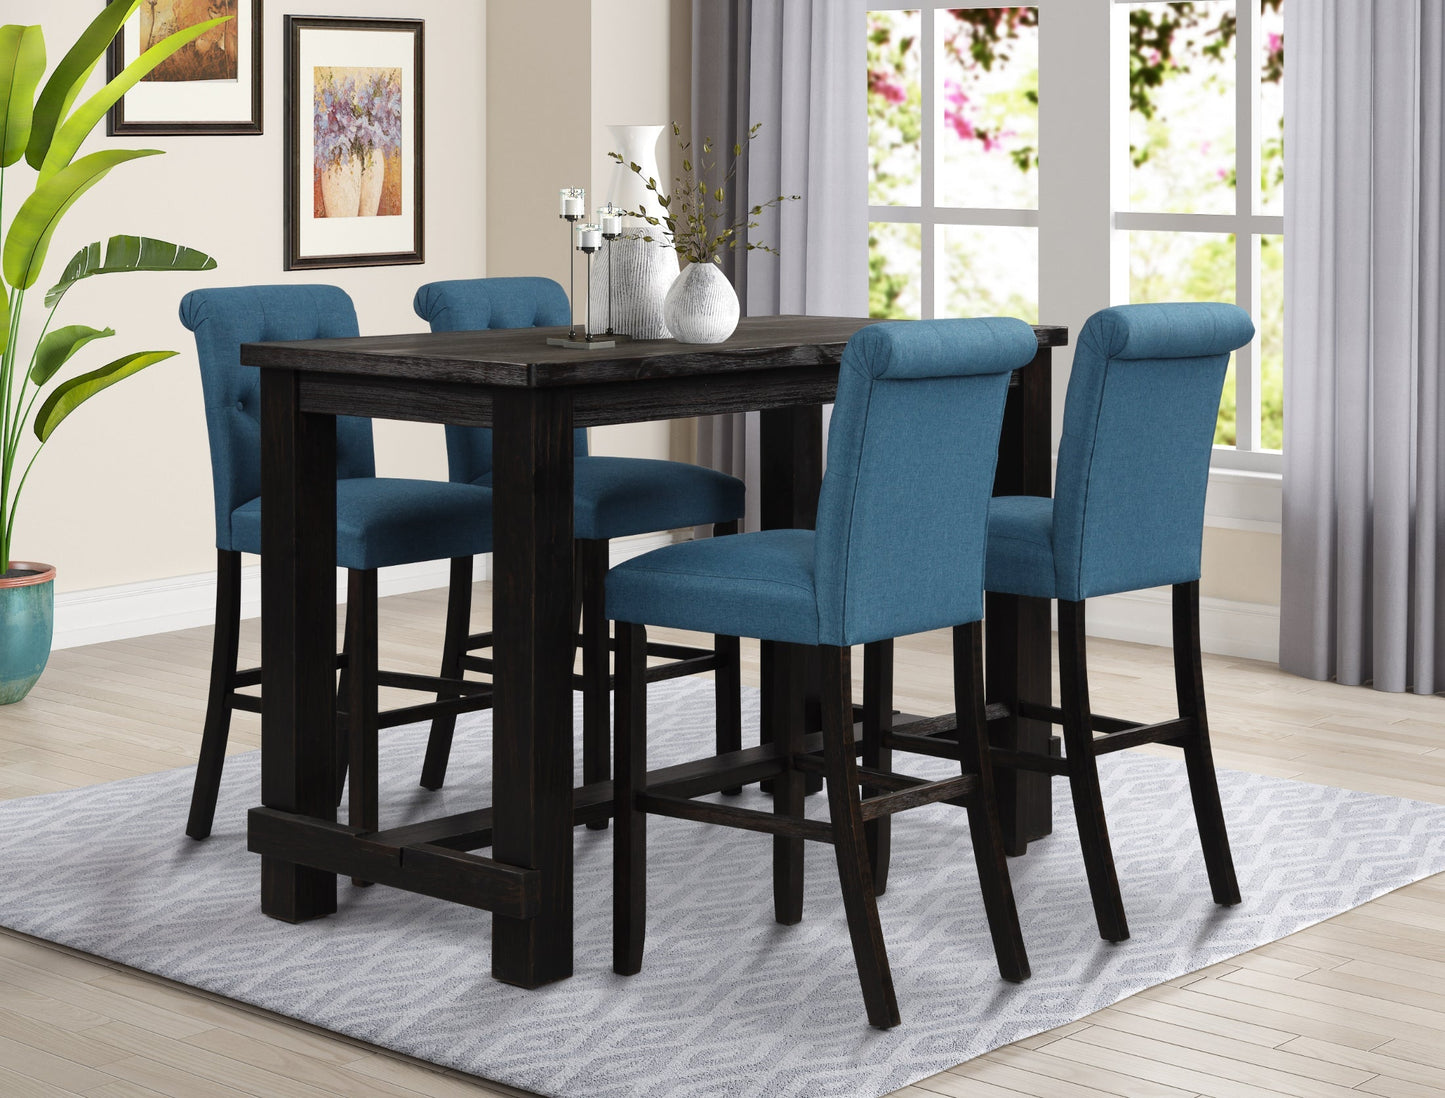 Leviton Antique Black Finished Wood 5-Piece Pub Set, Table with 4 Upholstered Barstools, Blue